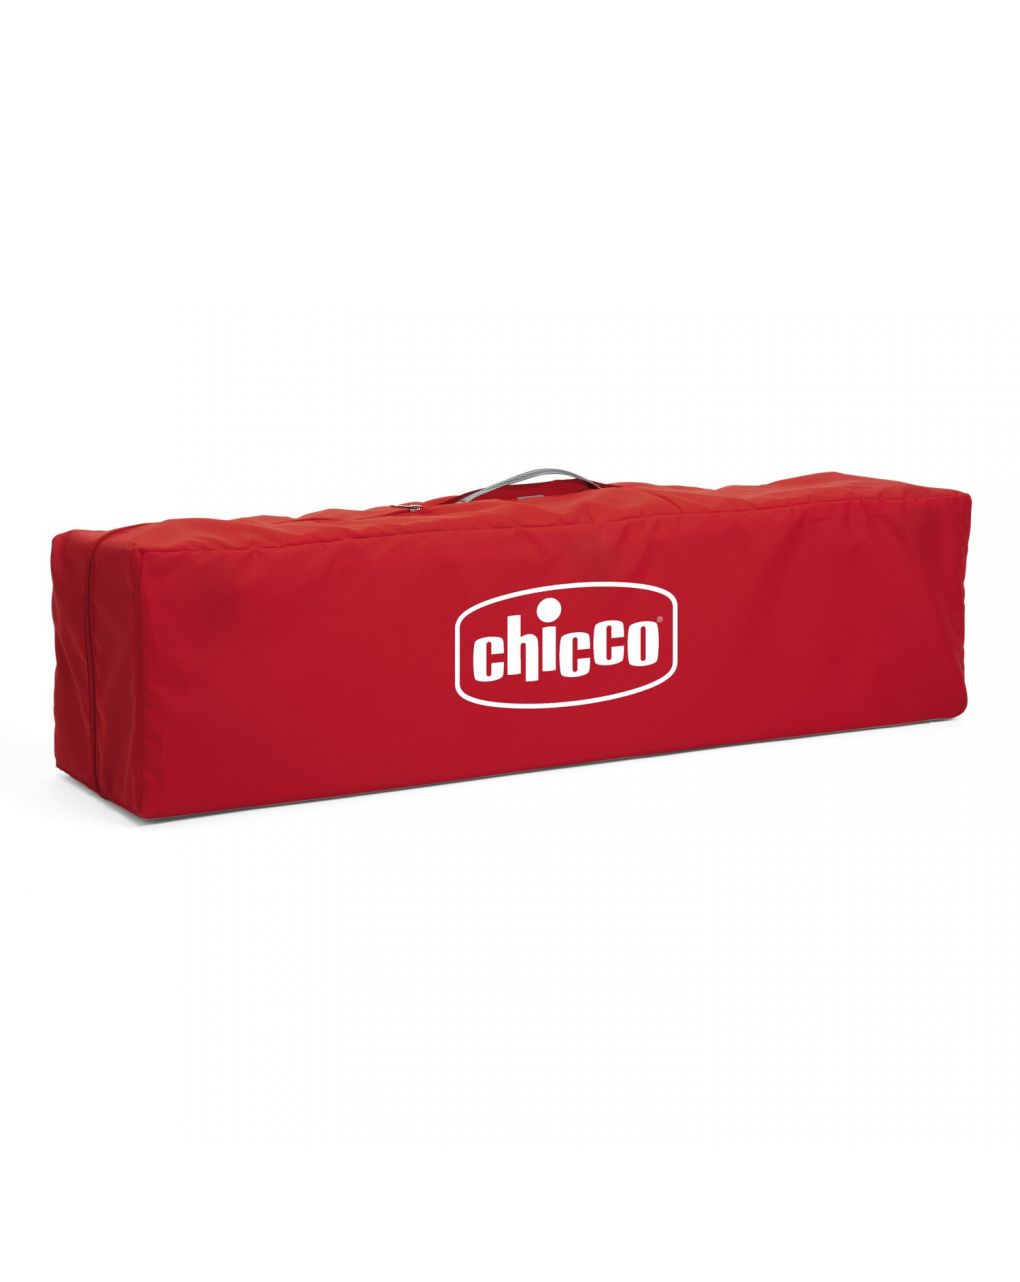 Open box chicco lion - Chicco